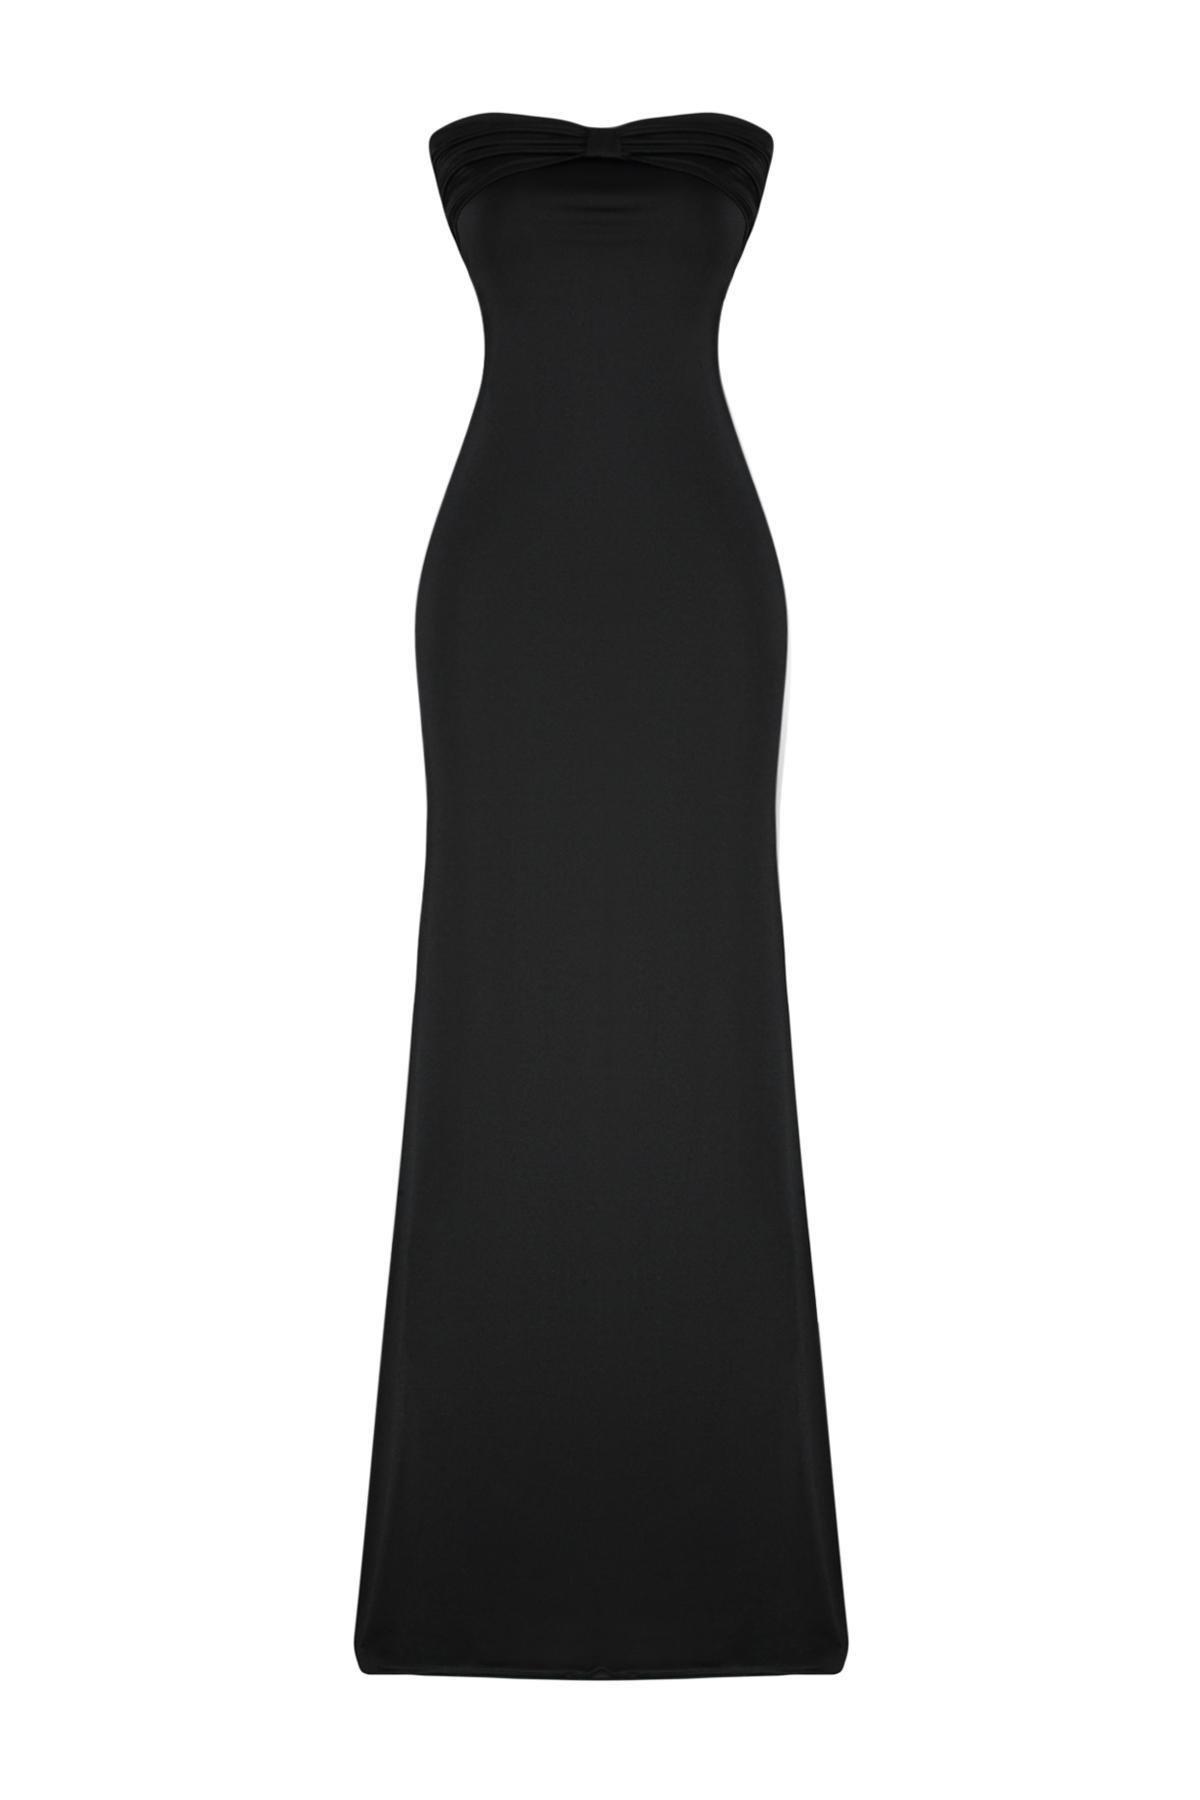 Trendyol - Black Mermaid Occasionwear Dress